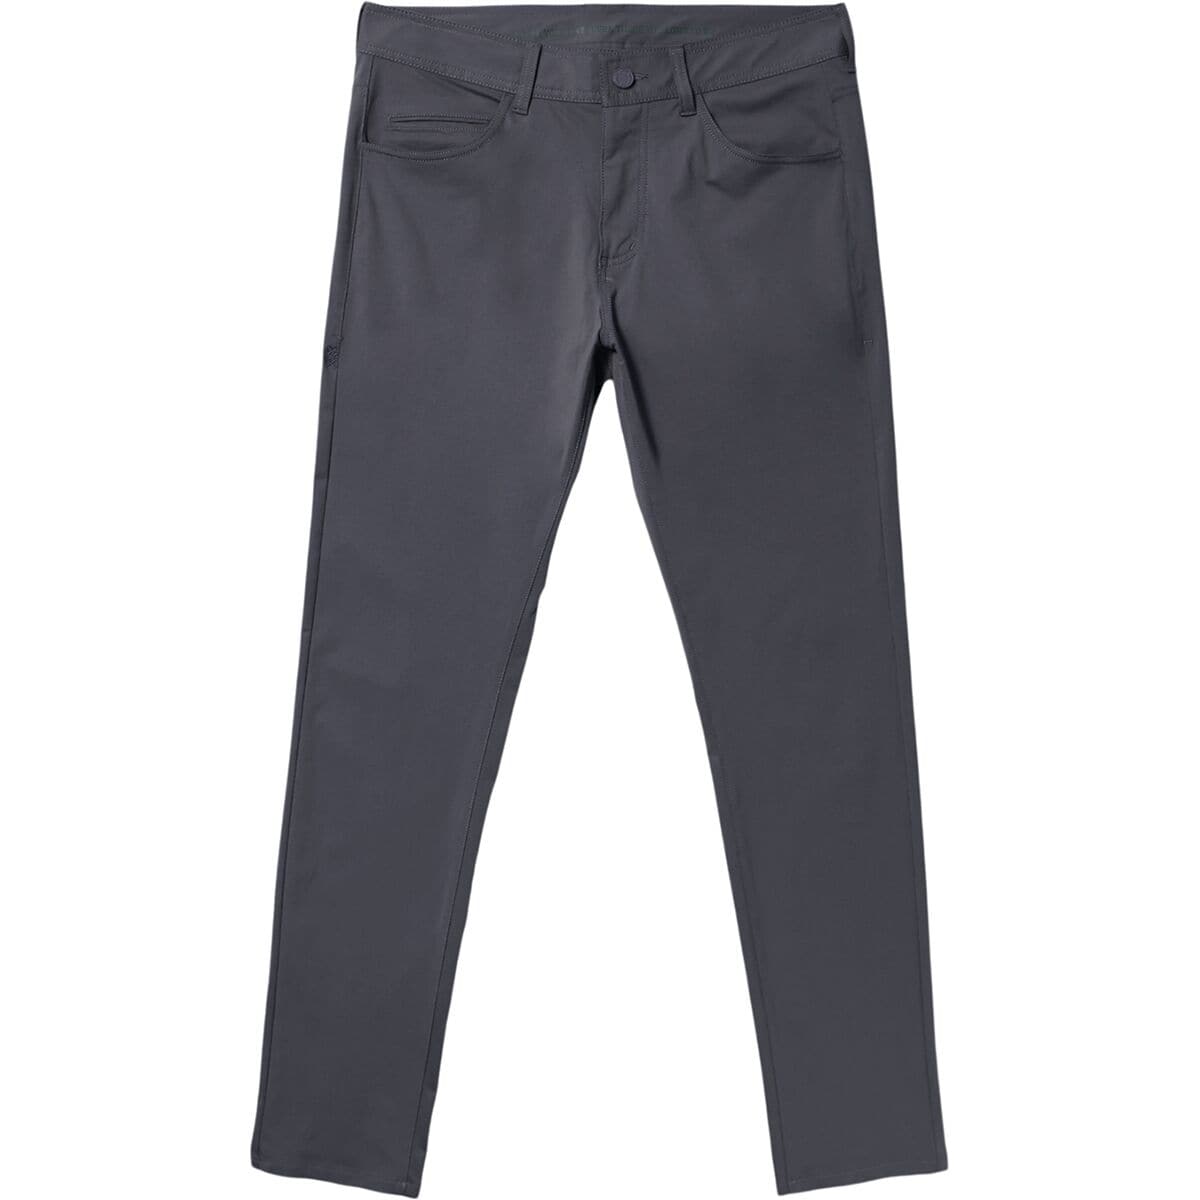 Rhone Commuter Five Pocket Pant - Men's - Clothing